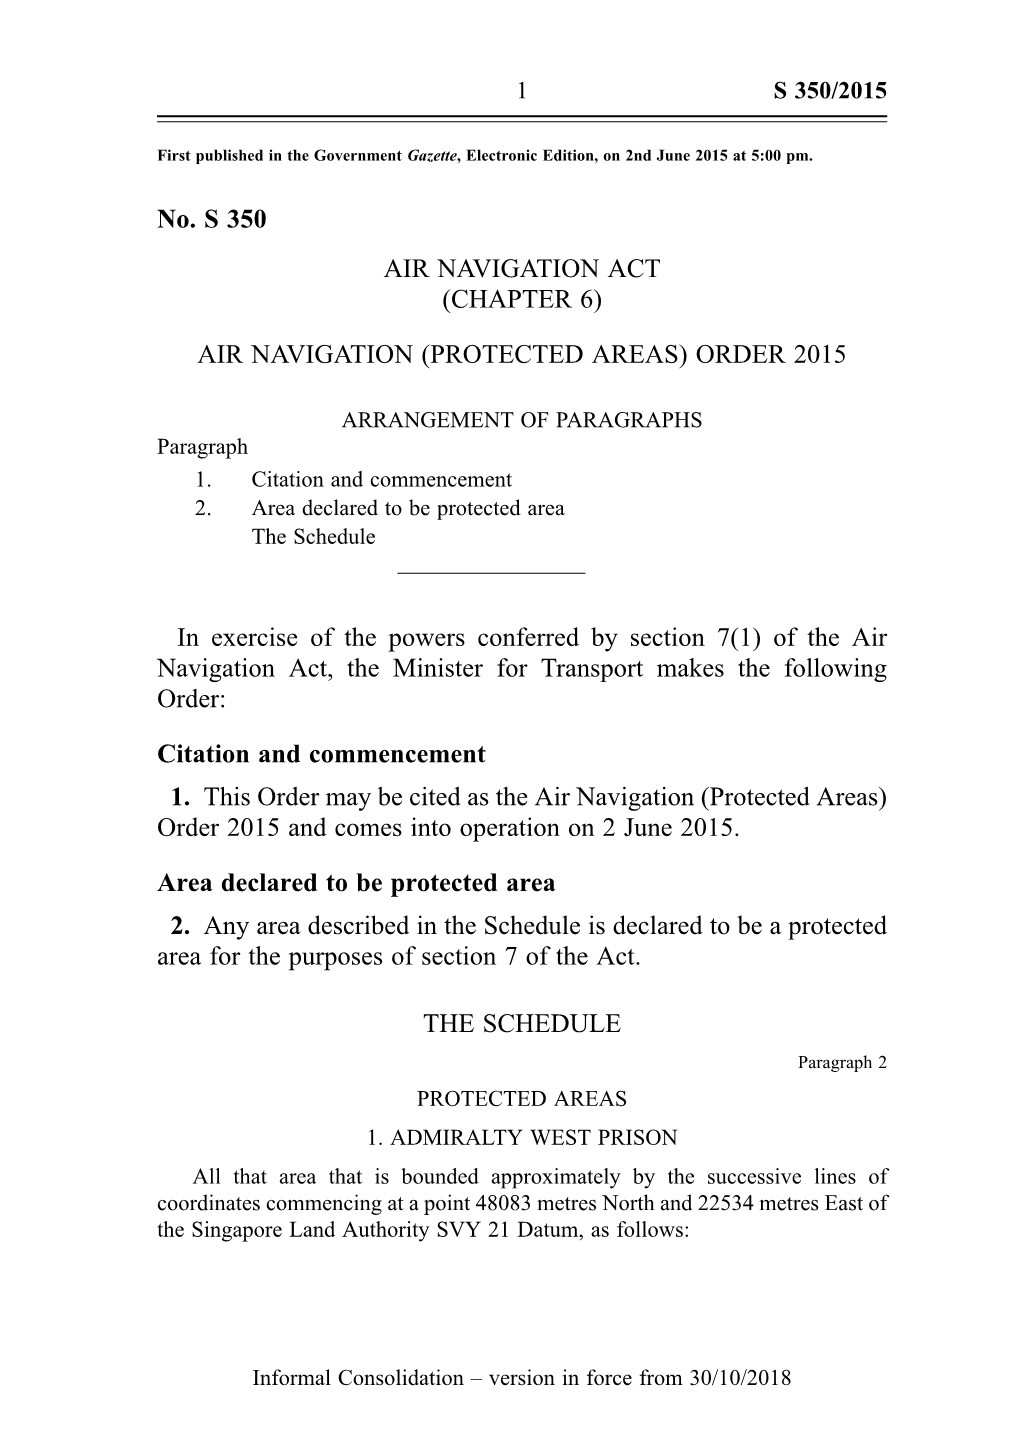 Air Navigation (Protected Areas) Order 2015